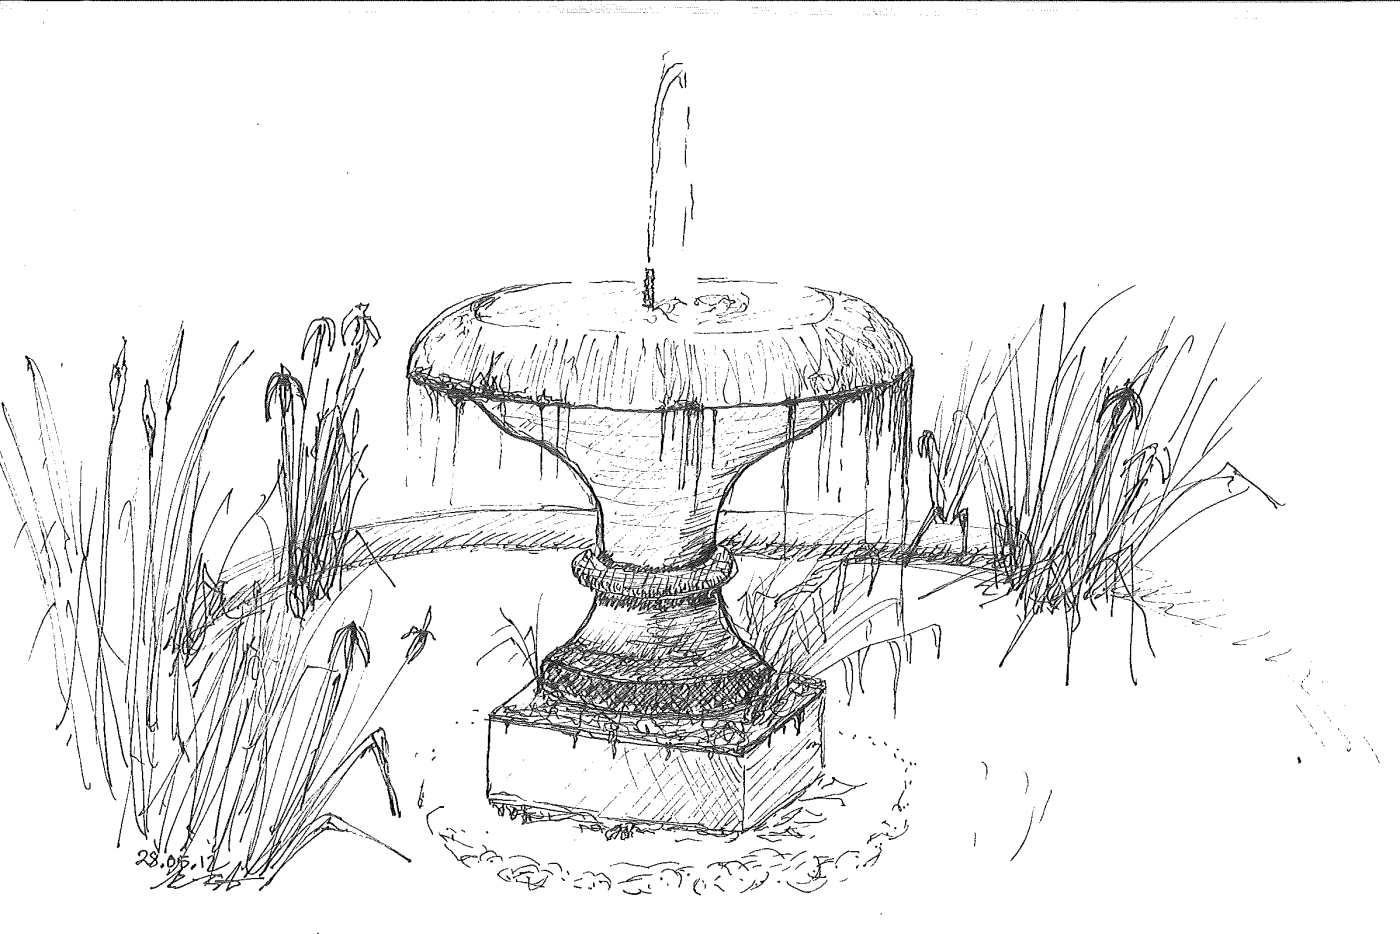 Airlie Gardens Fountain